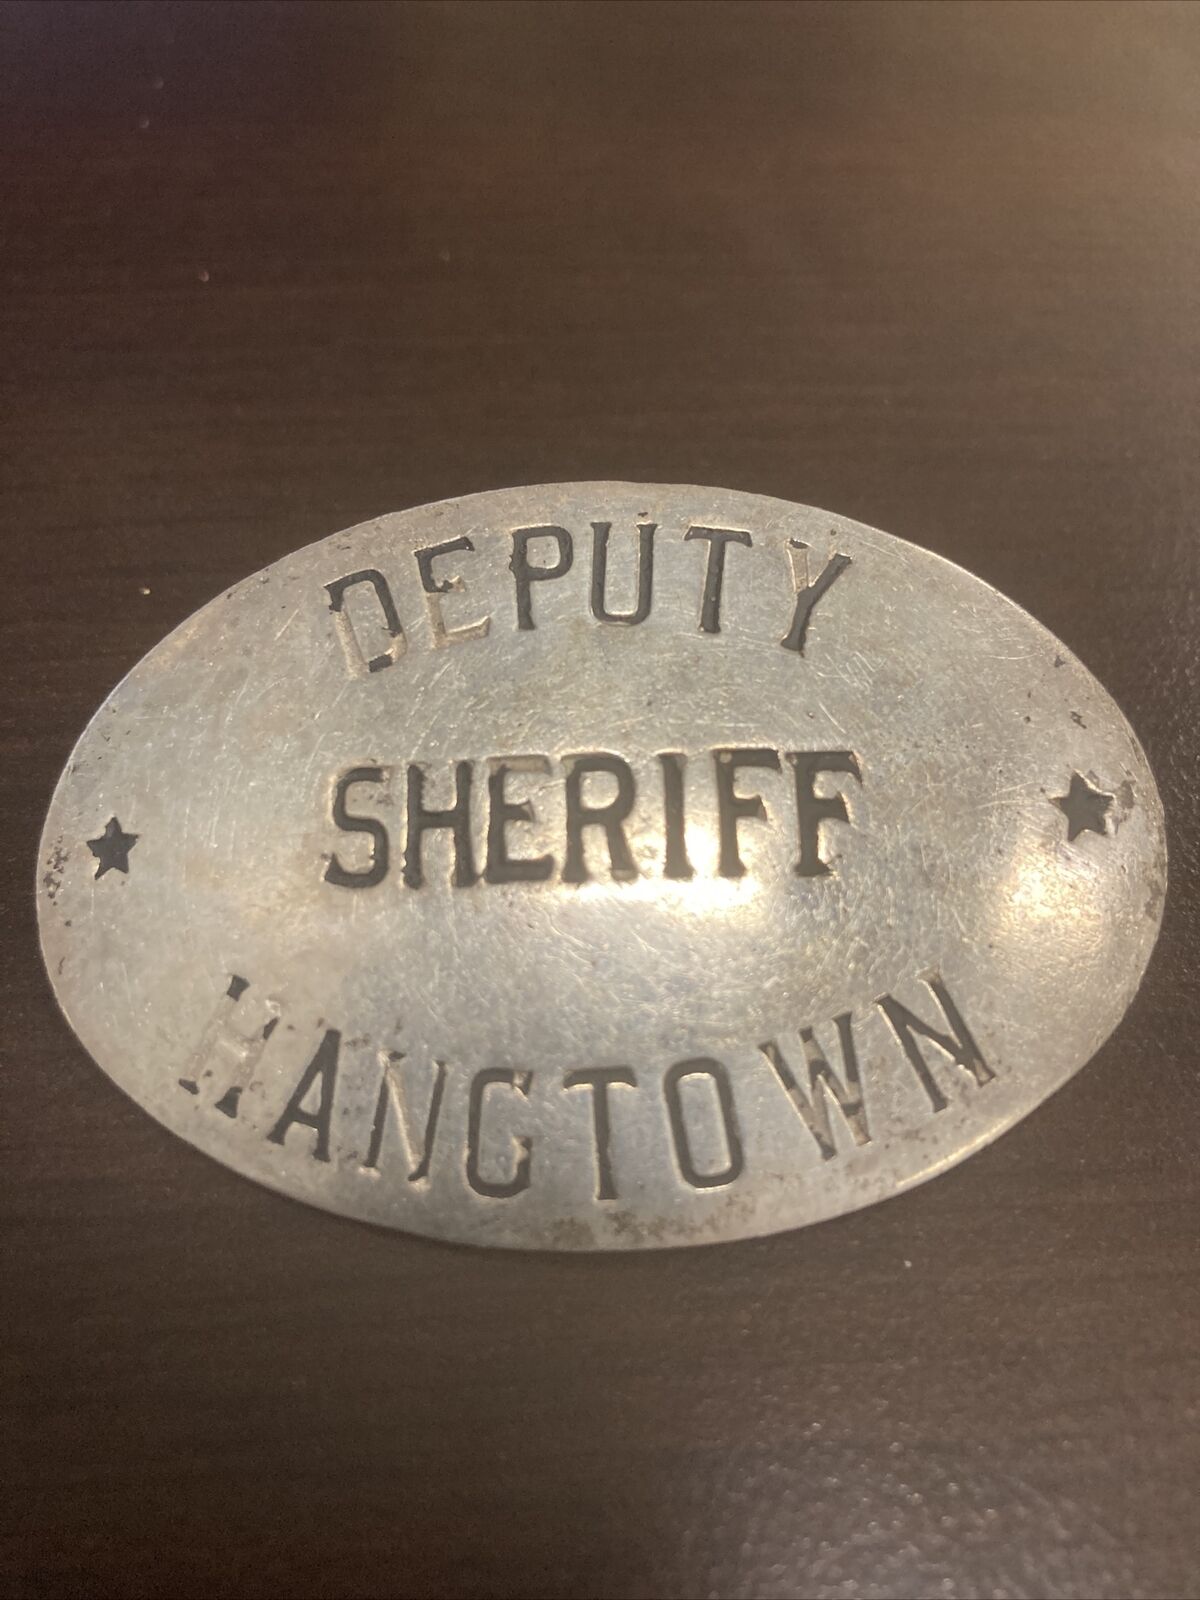 Antique Silver Deputy Sheriff Hangtown Pin Badge 2.5